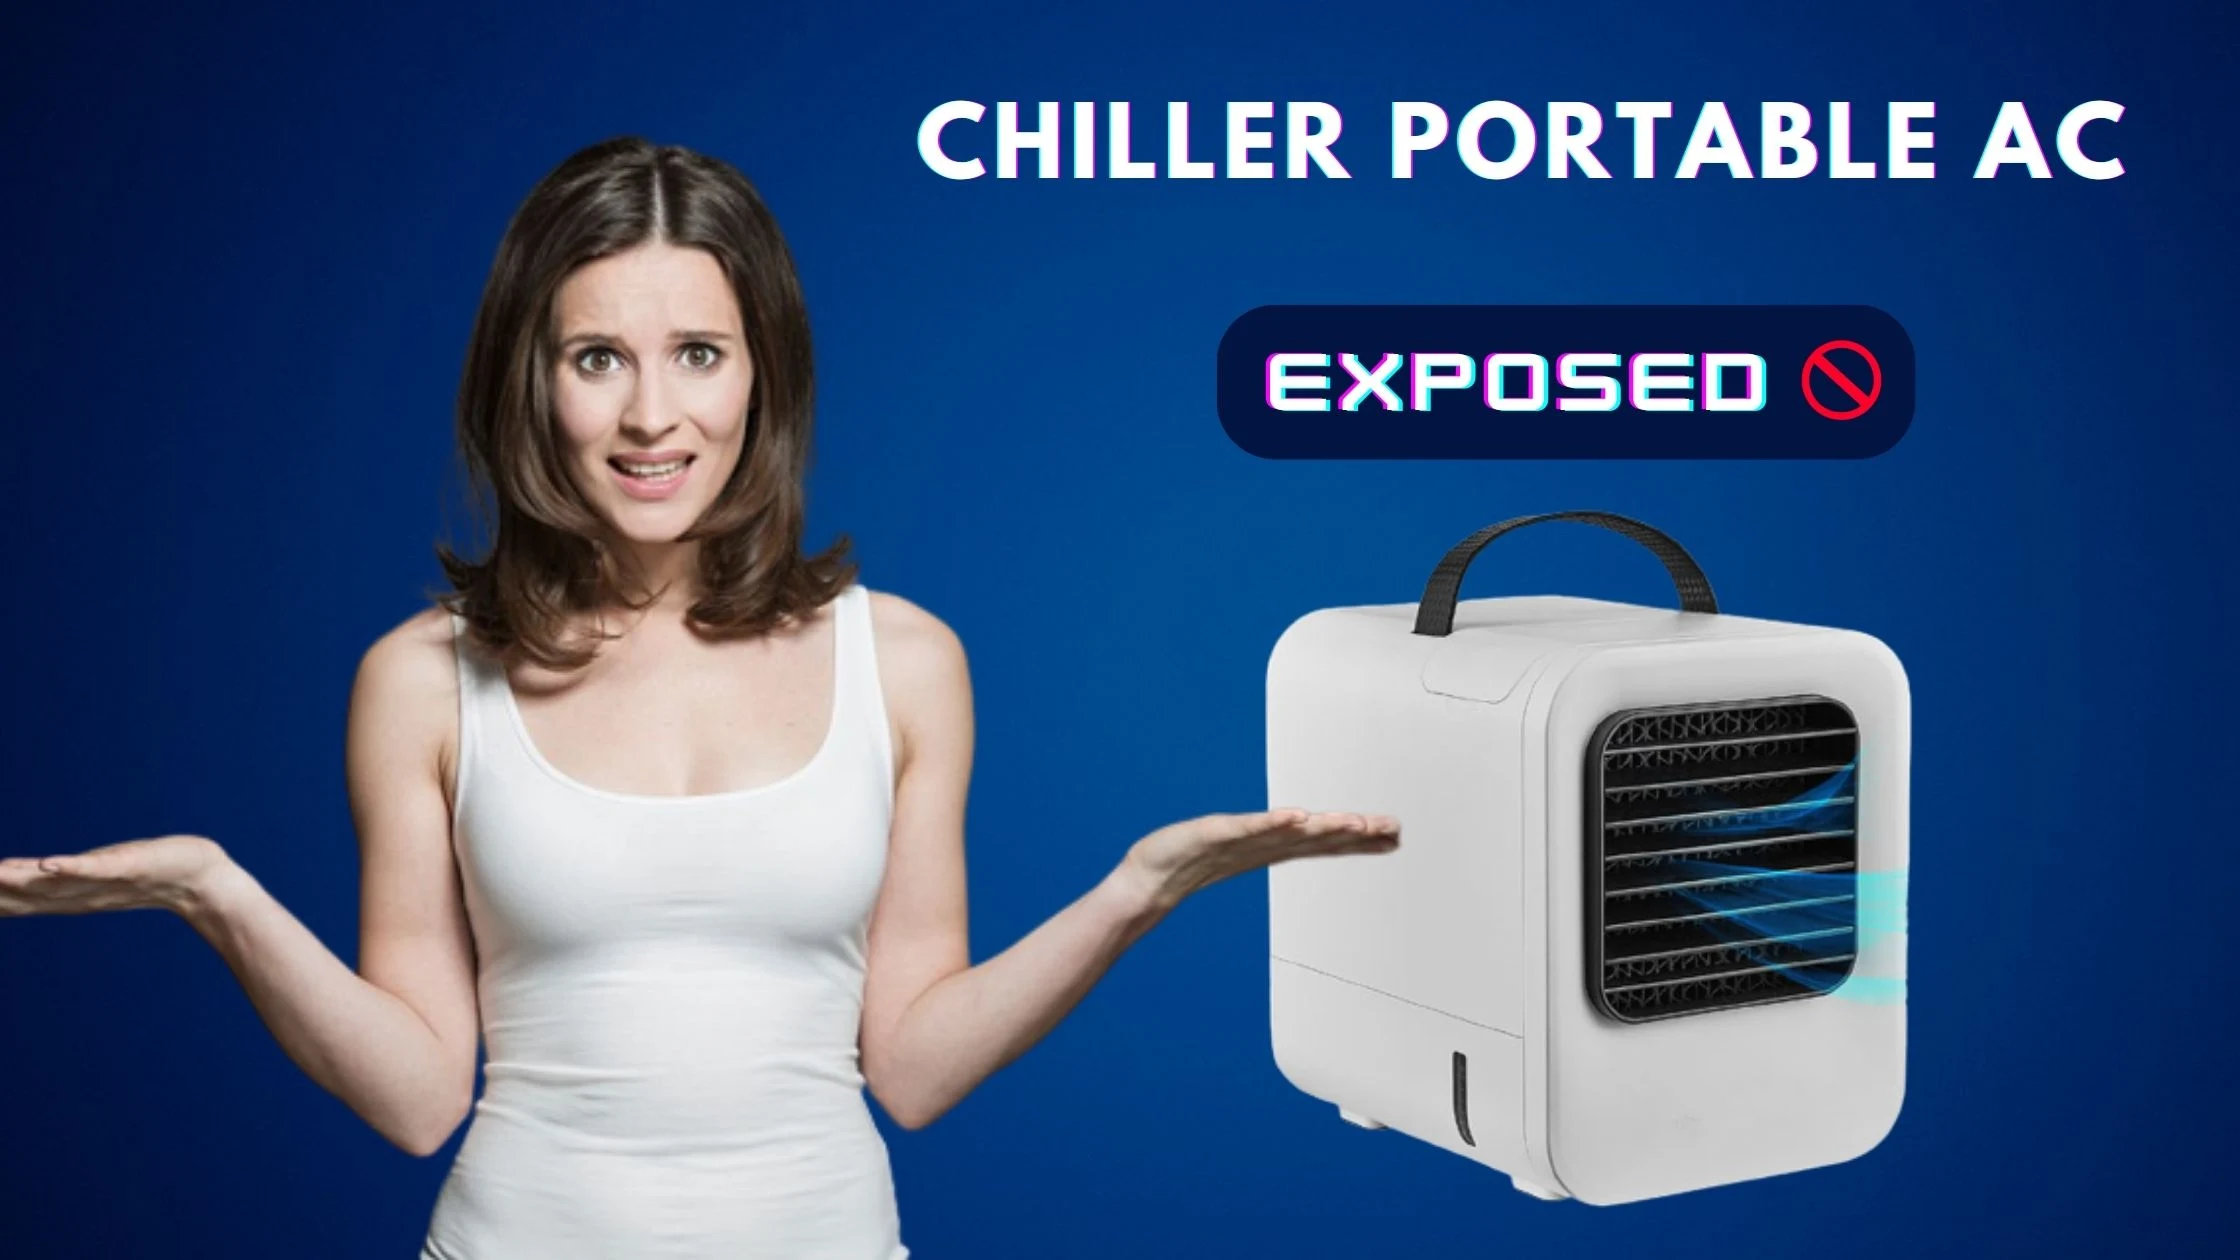 Chiller Portable AC Scam